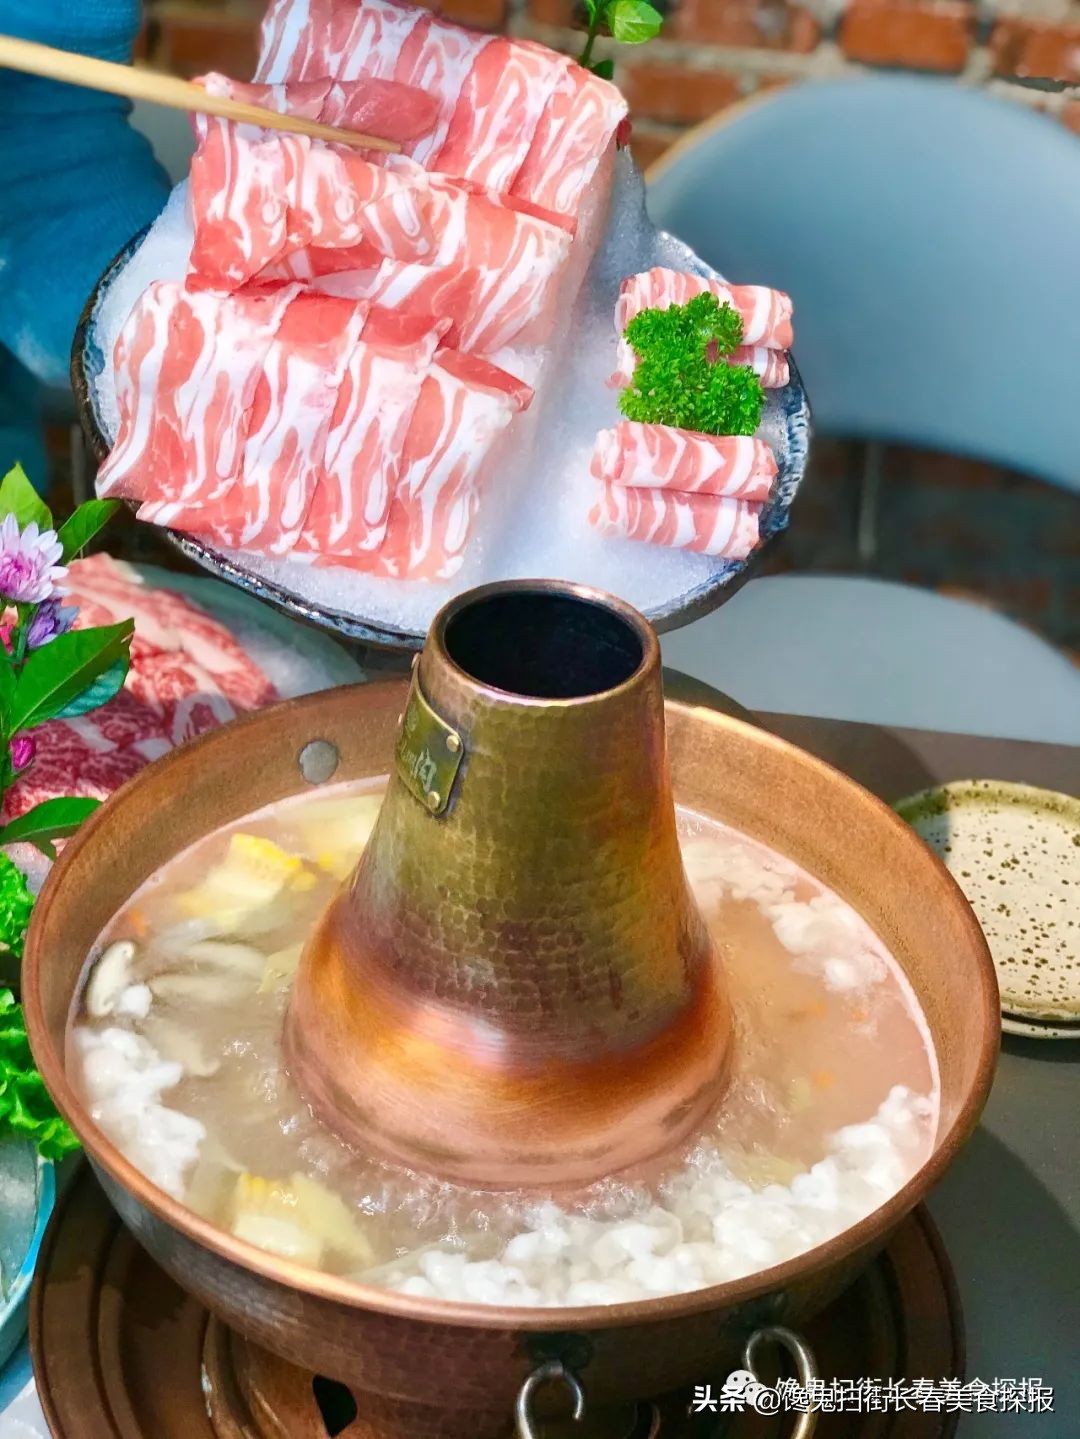 Take iron porcelain surely in Changchun rub eating house